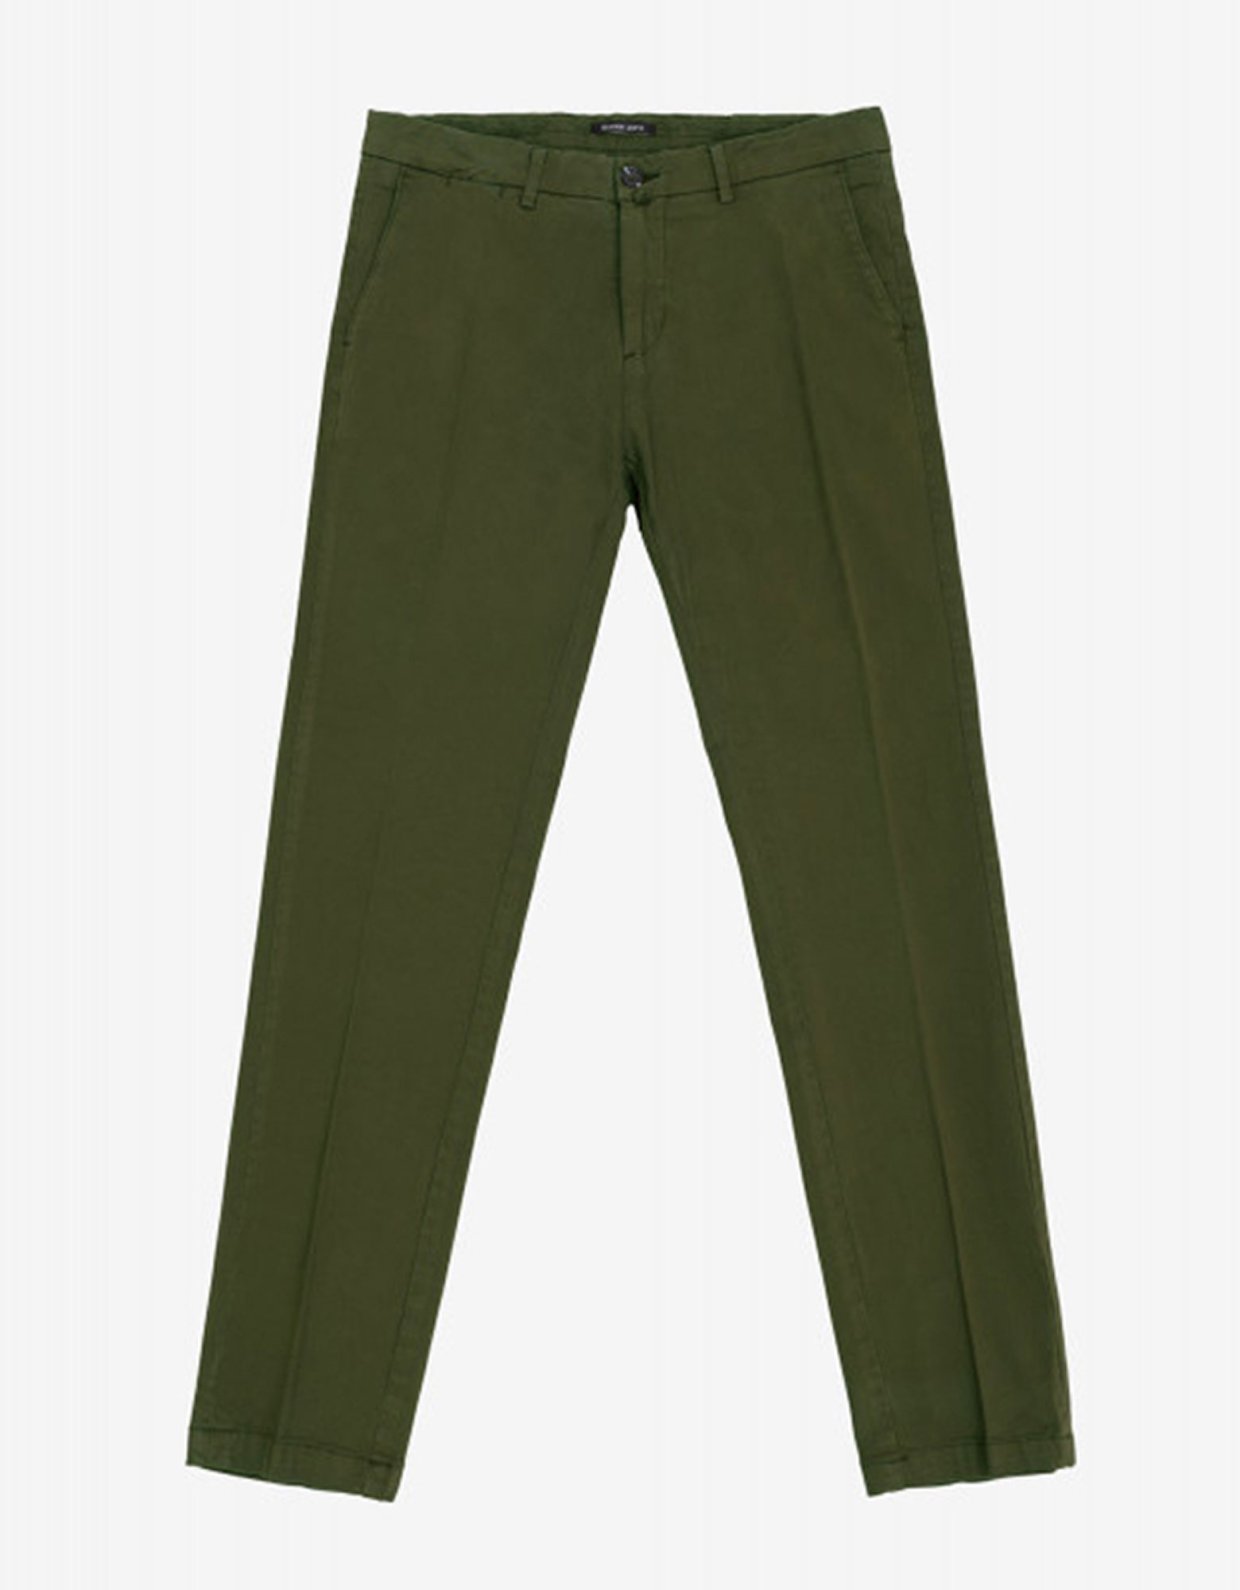 Gianni Lupo Tahoma pants military green